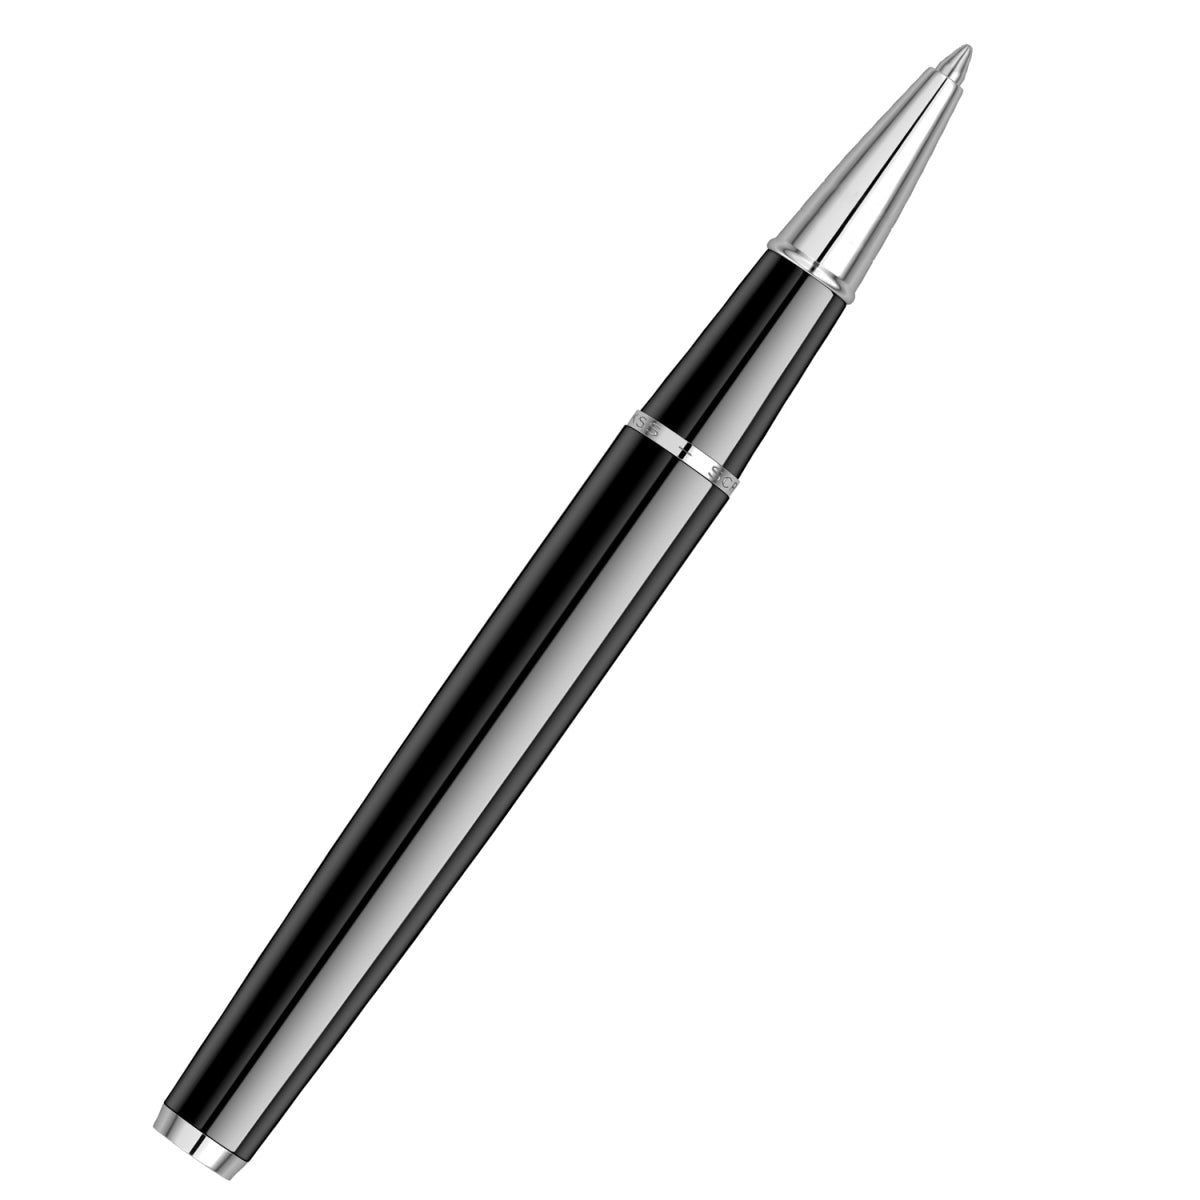 Scrikss Metropolis Black Barrel With Chrome Finish Cap Roller Ball Point Pen, Chrome Trims, Roller Pen